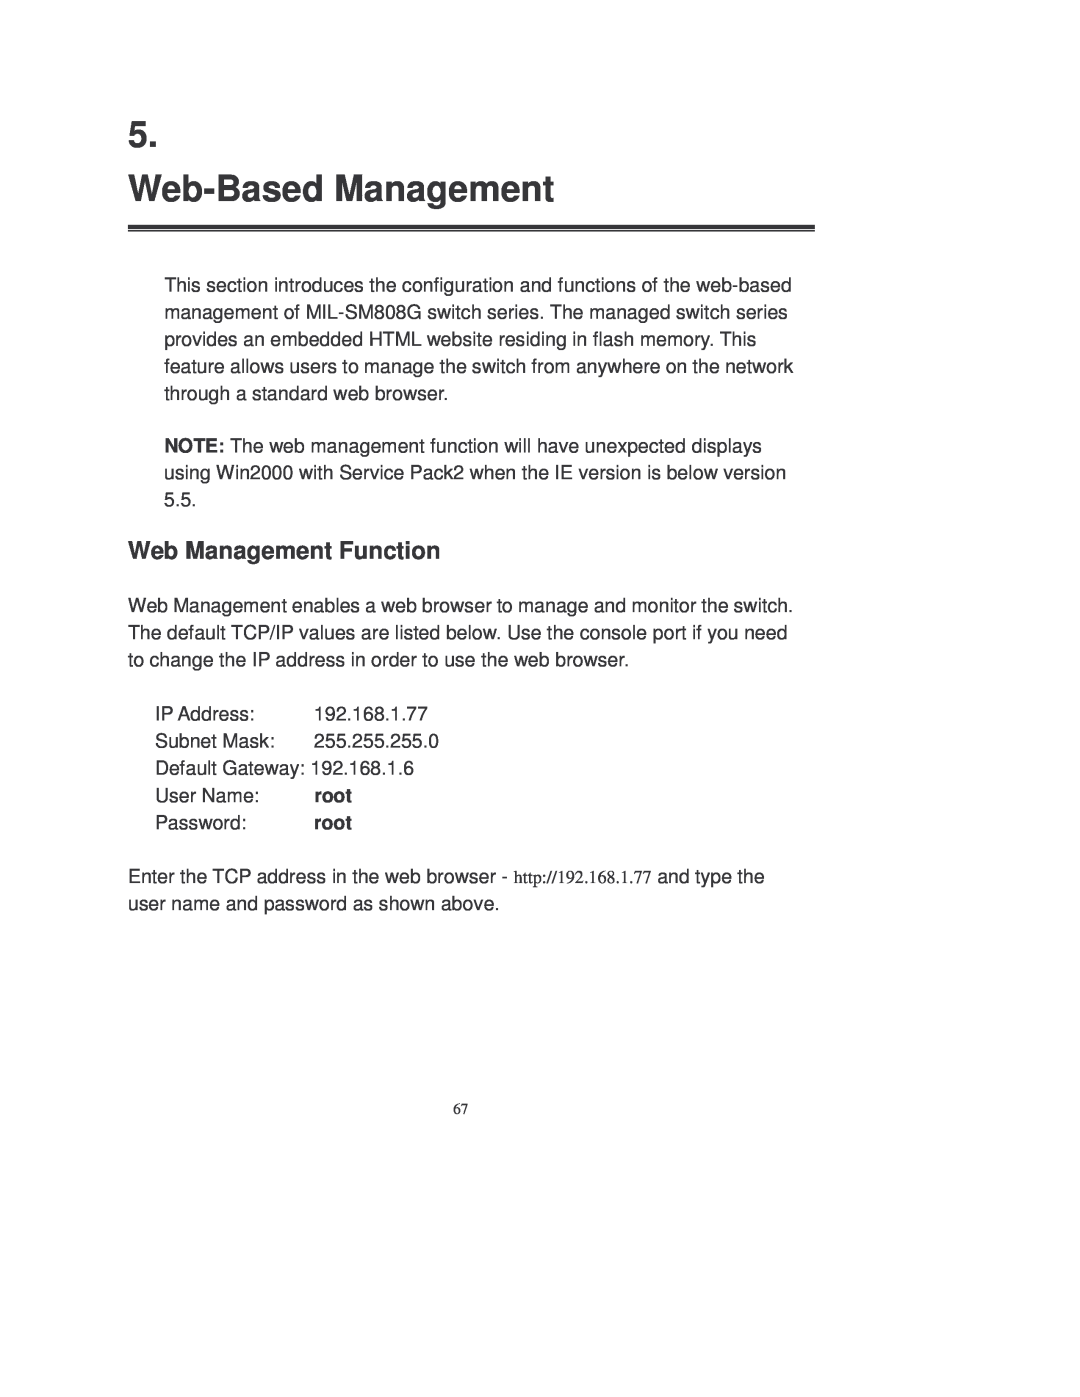 Transition Networks MIL-SM808GPXX manual Web-Based Management, Web Management Function 